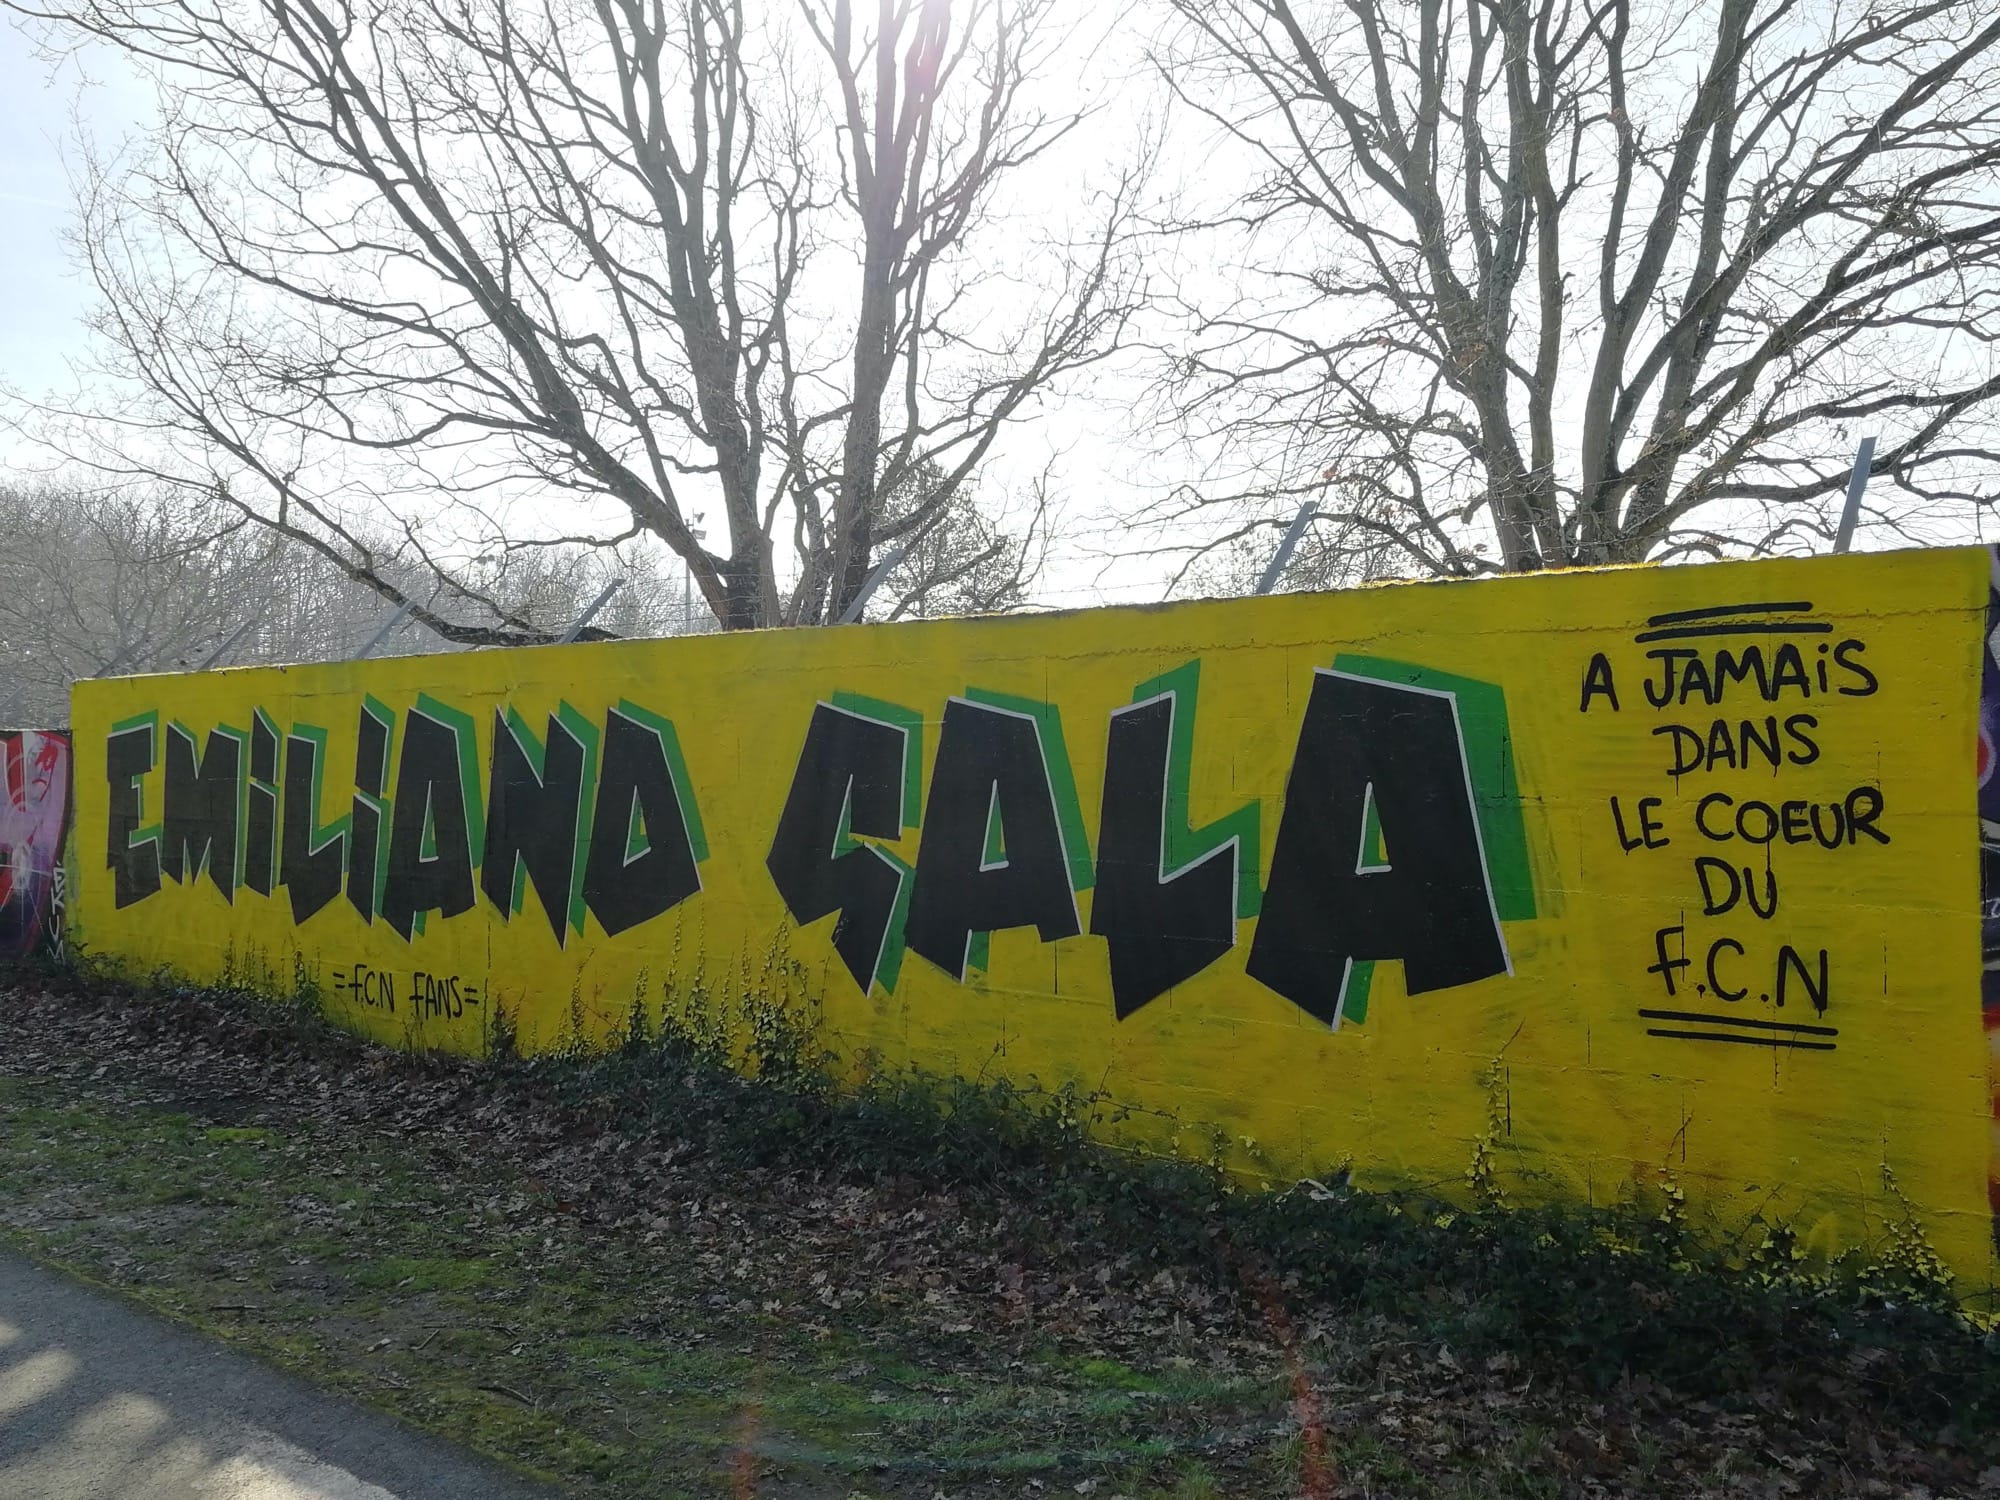 Graffiti 851 Emiliano Sala, FC Nantes captured by Rabot in Nantes France